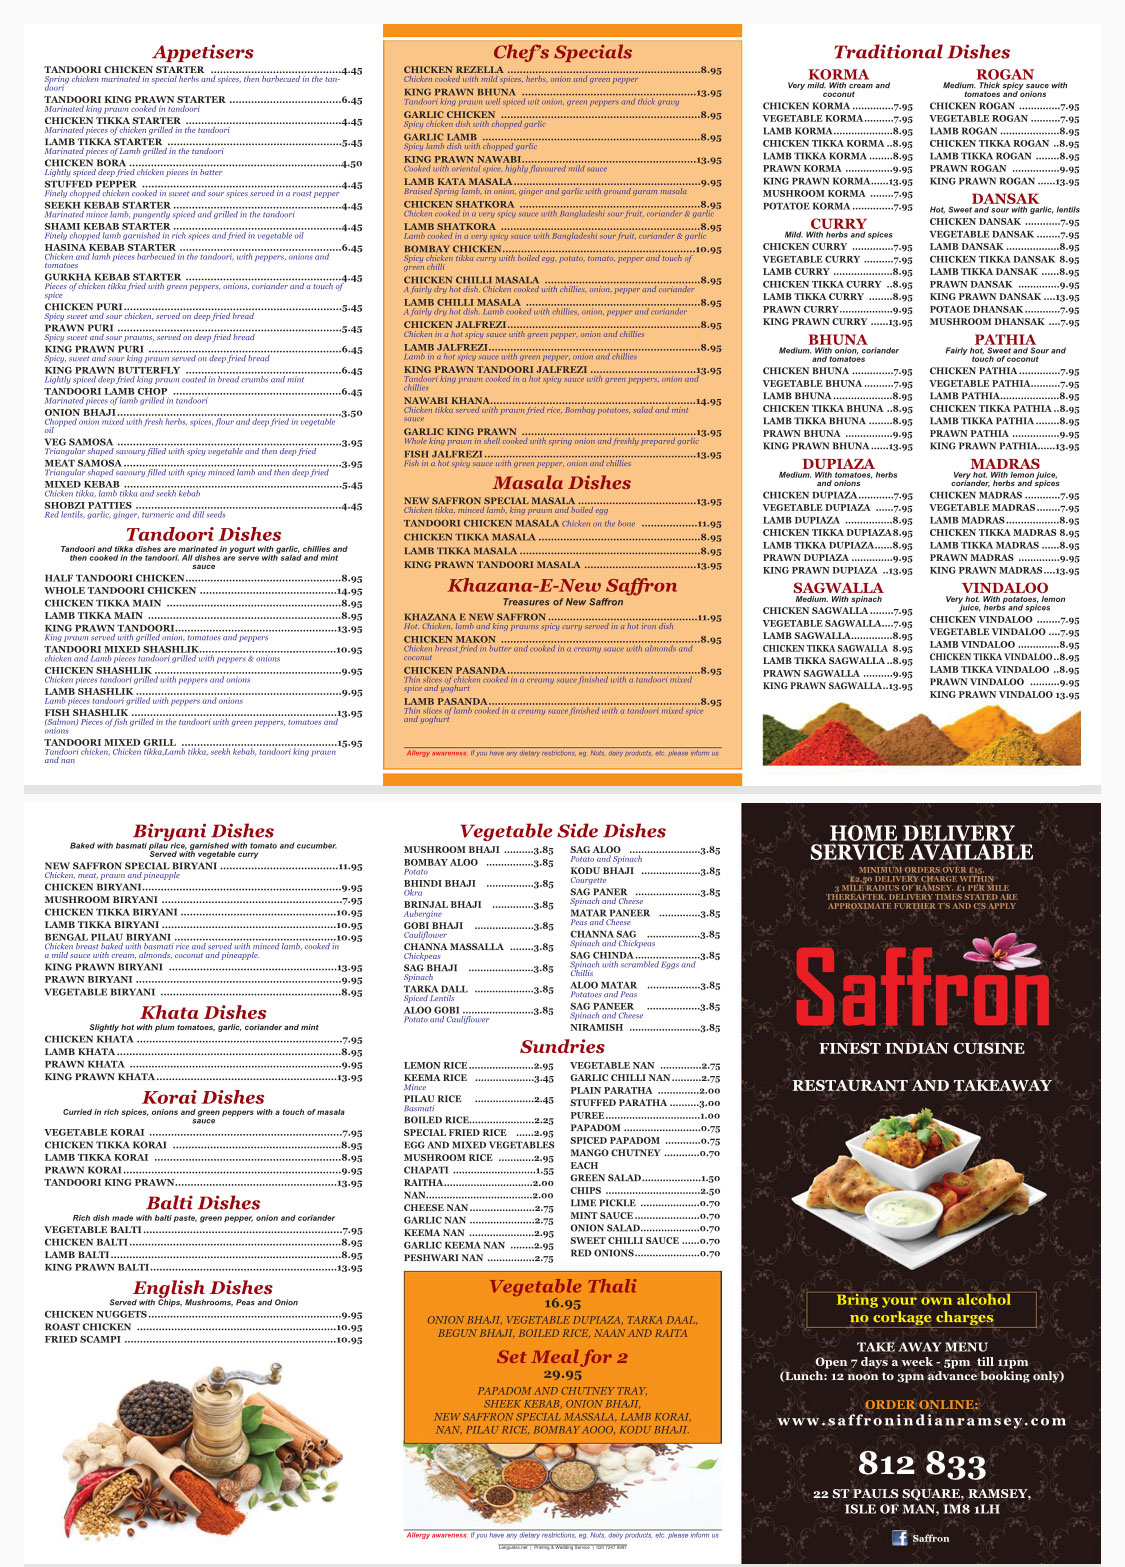 Saffron Fine Indian restaurant and takeaway 